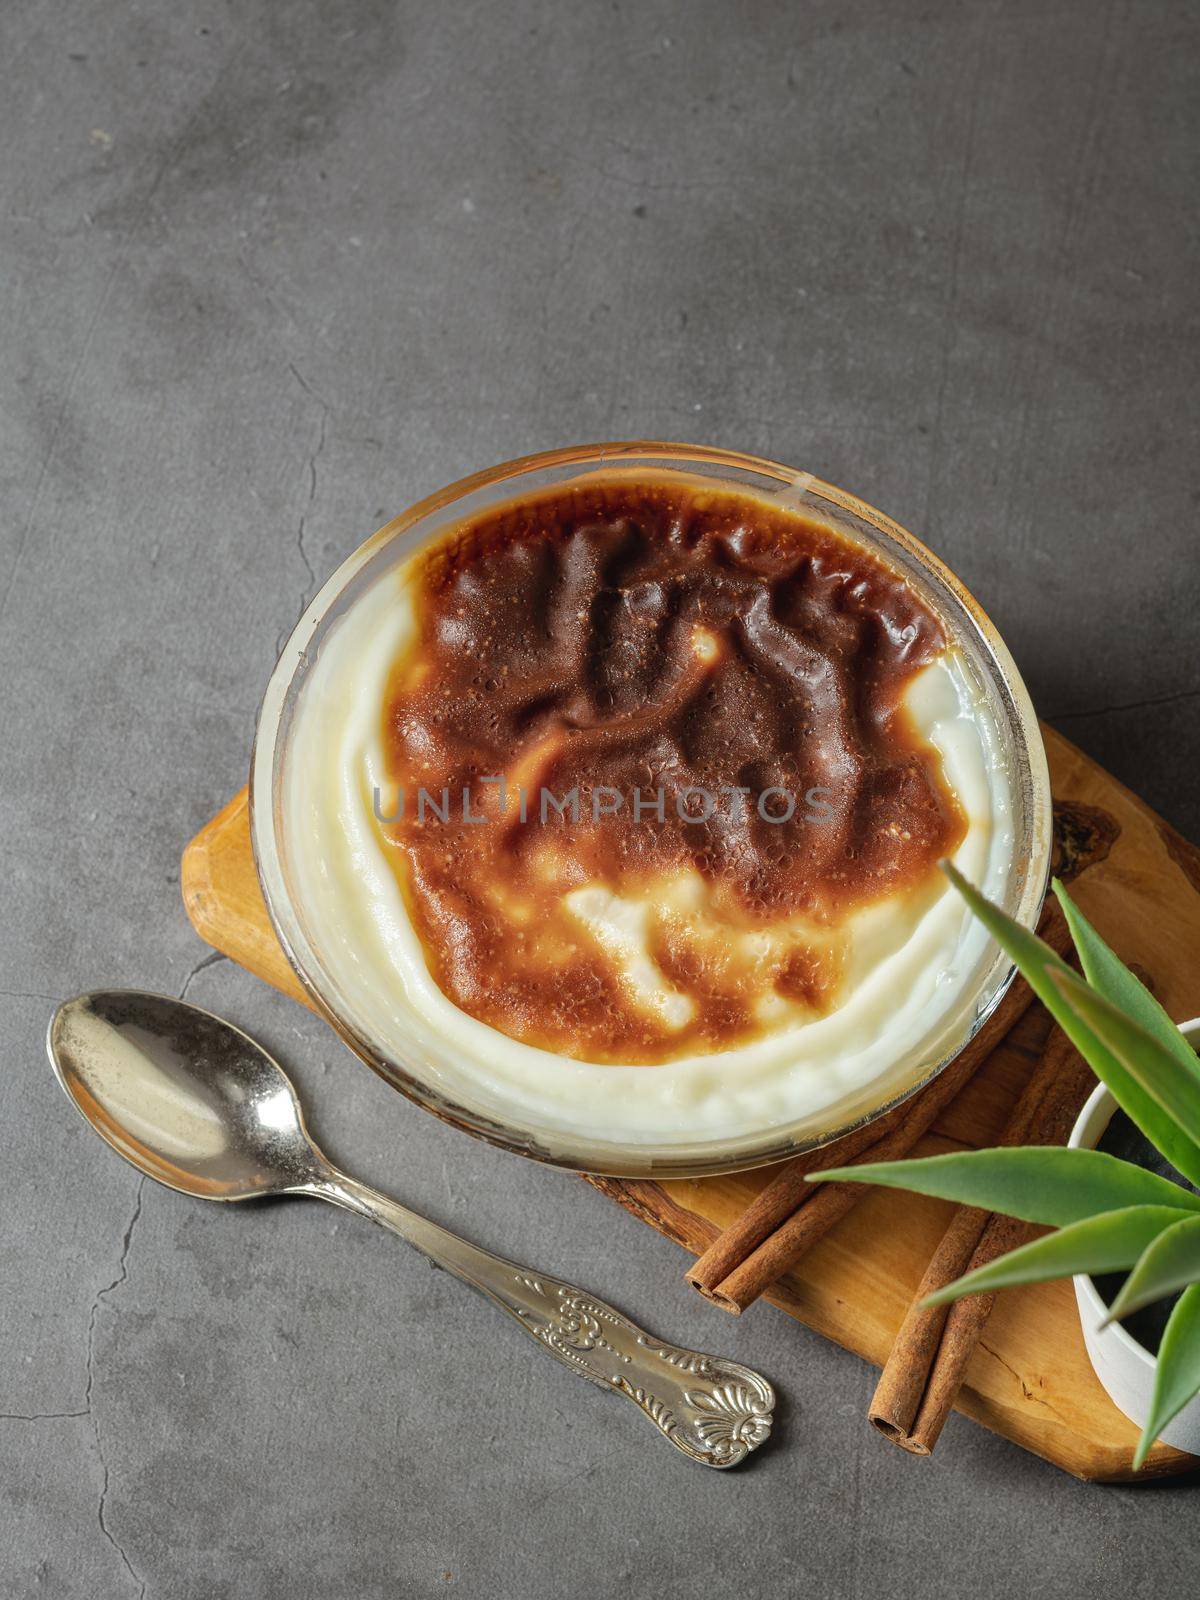 Traditional turkish dessert bakery rice pudding Turkish name Firin Sutlac in glass bowl